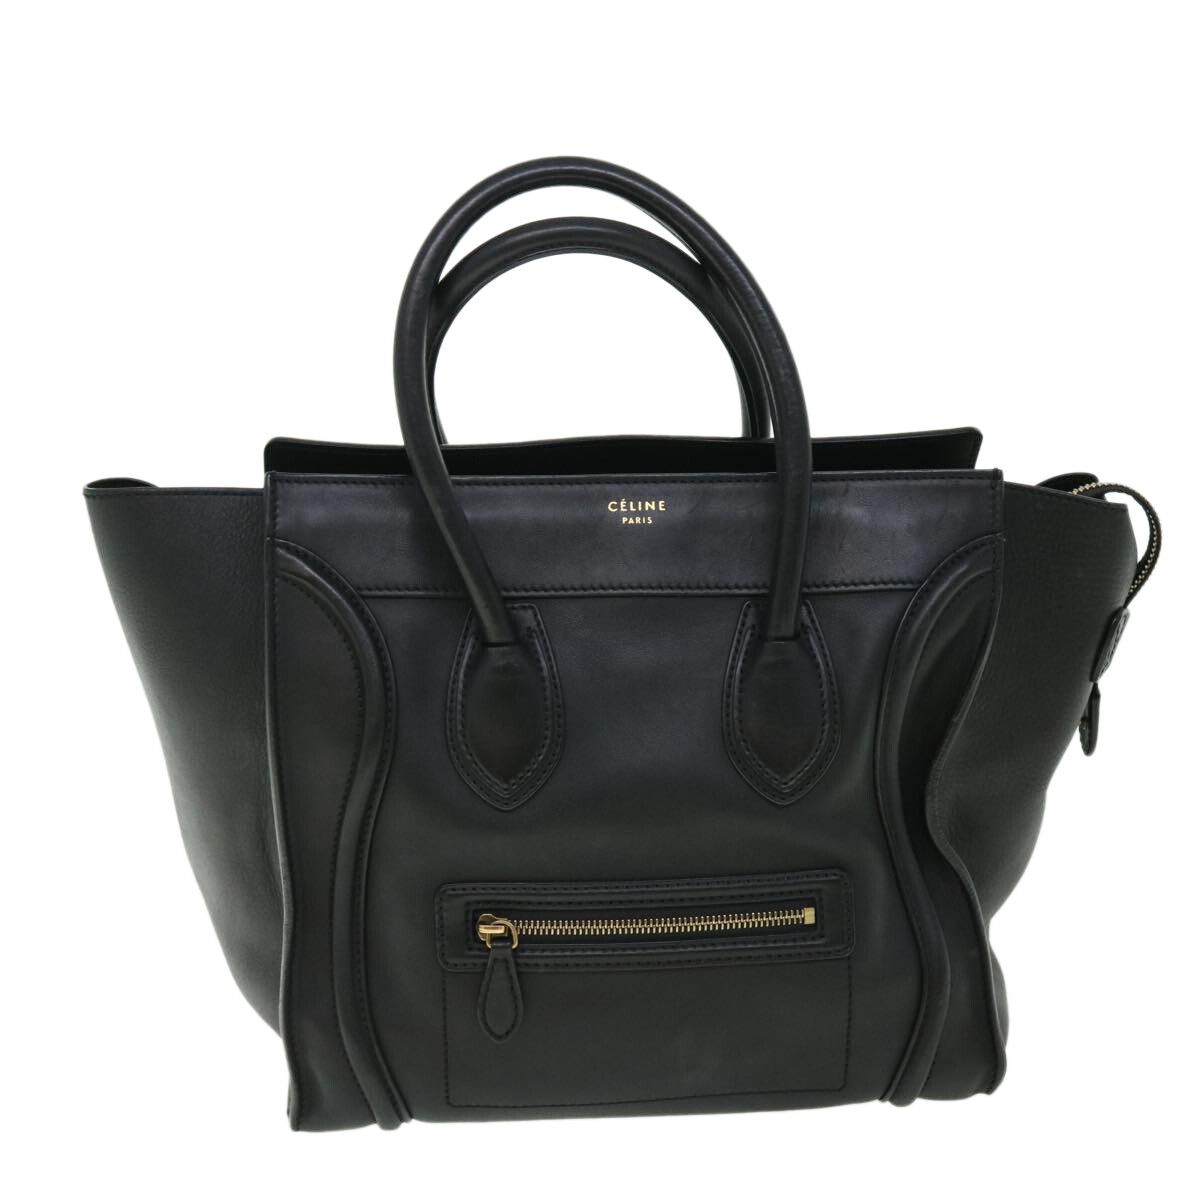 image of Celine Céline Luggage Handbag in Black, Women's